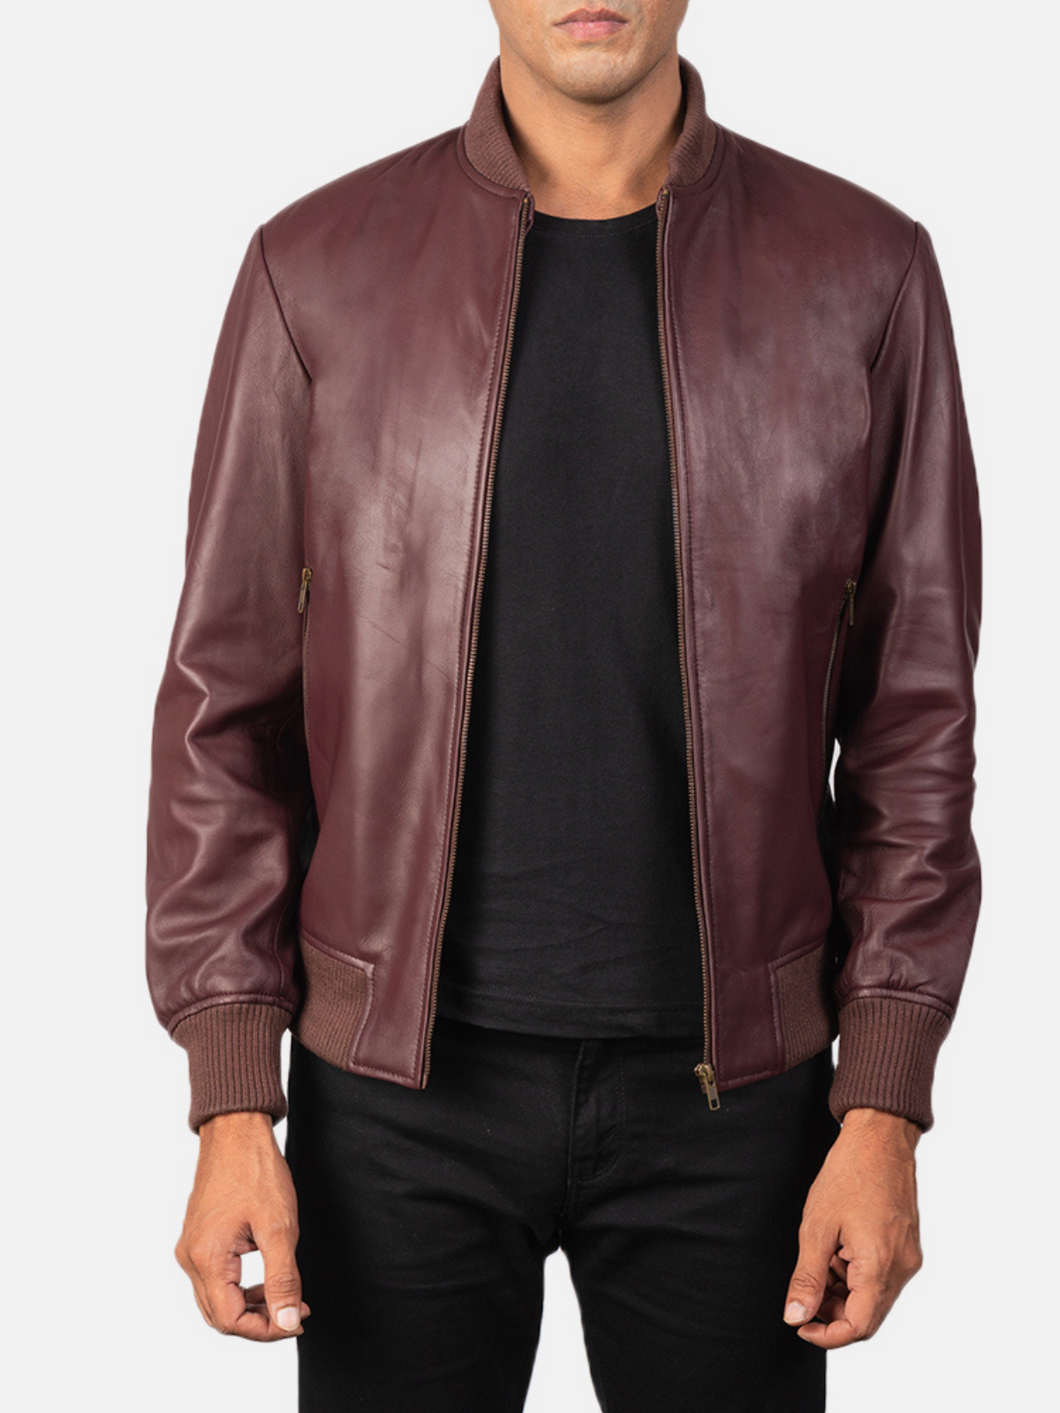 Men's trendy maroon bomber sheepskin leather jacket